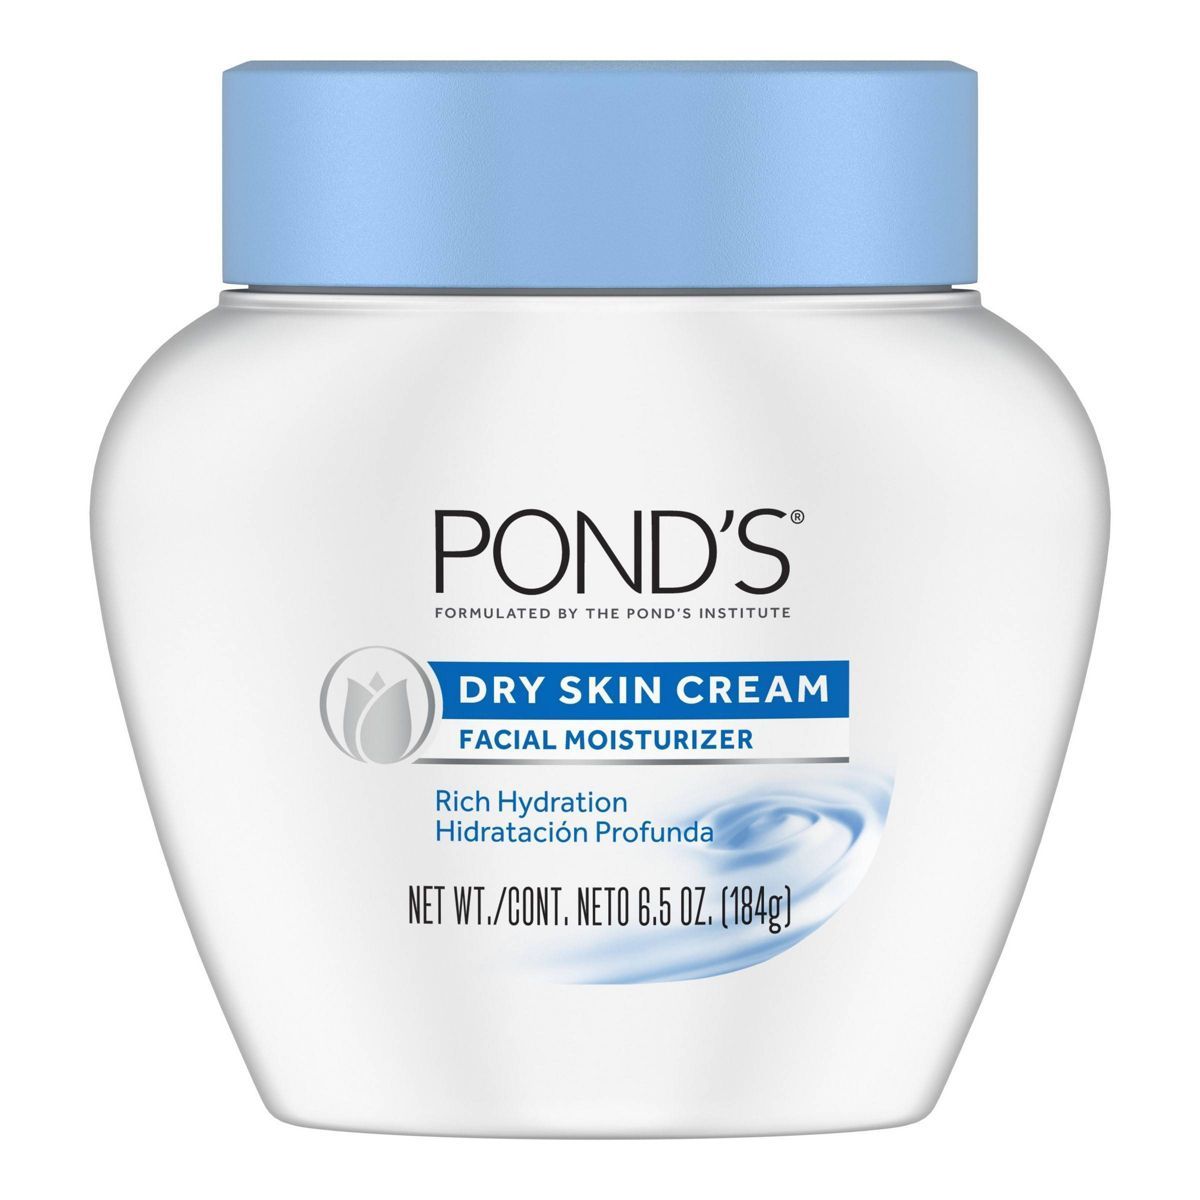 POND'S Dry Skin Cream Facial Moisturizer - 6.5oz | Target